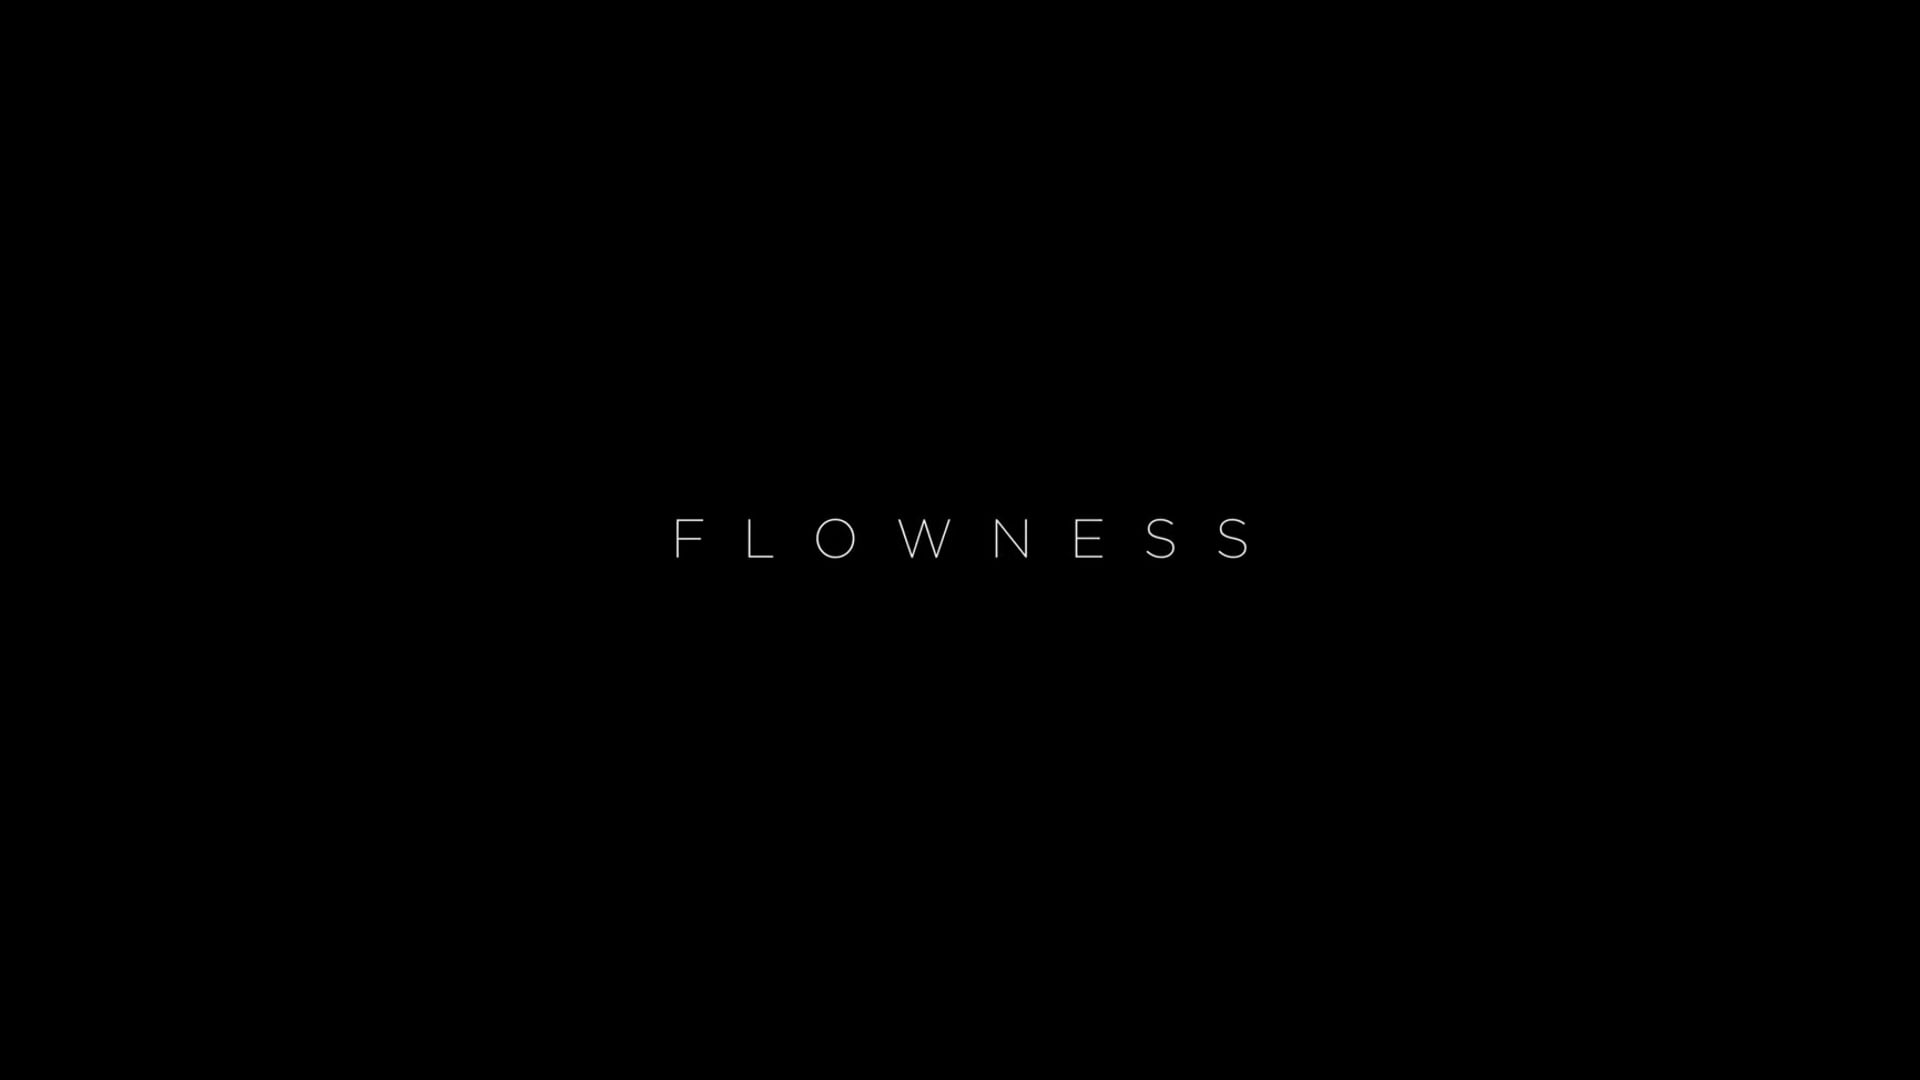 FLOWNESS